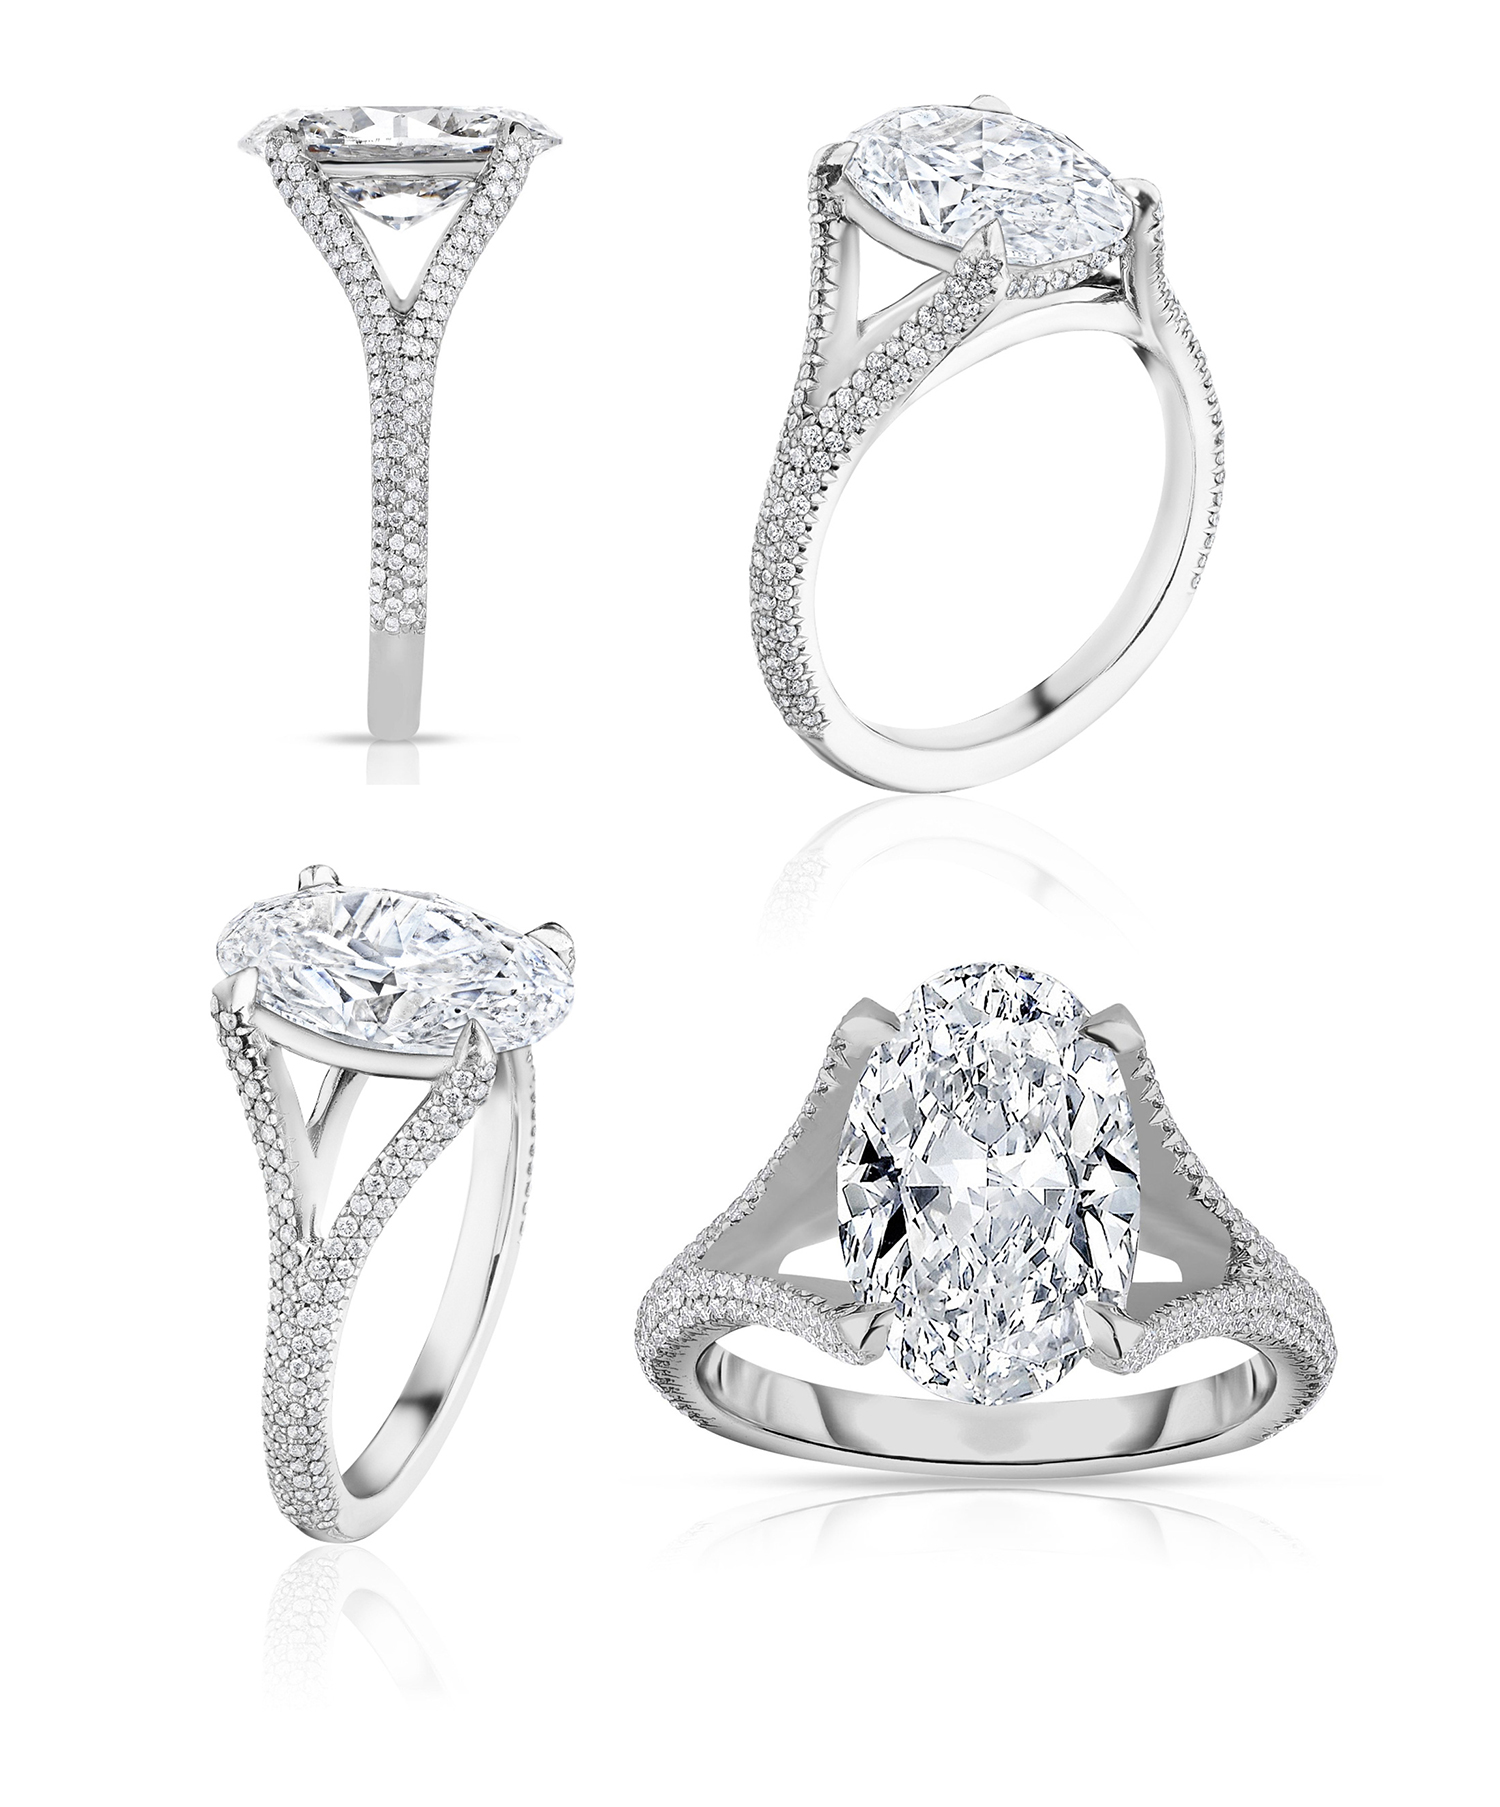 INSTORE Design Awards 2021 &#8211; Best Engagement/Wedding Jewelry Over $5,000